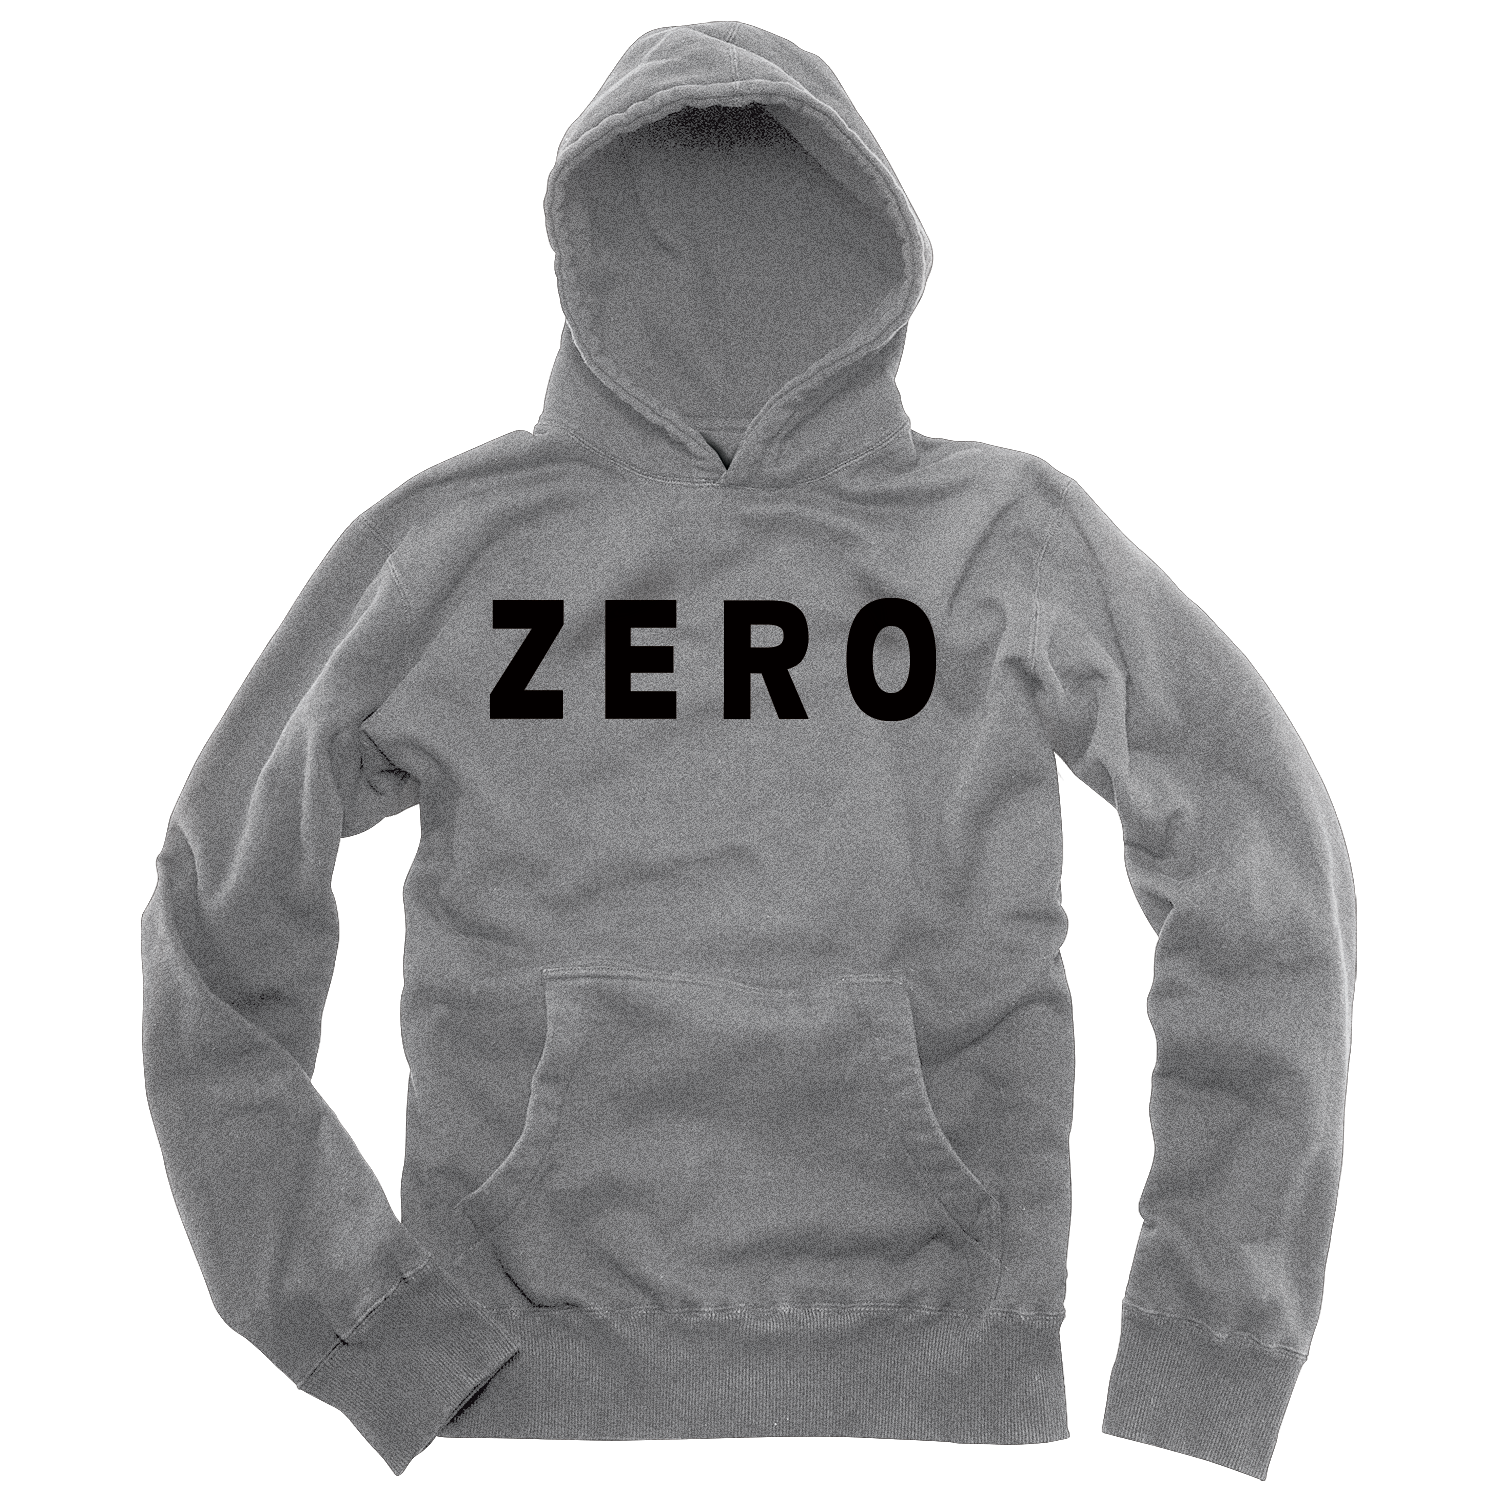 Zero Army gray and black fleece pullover